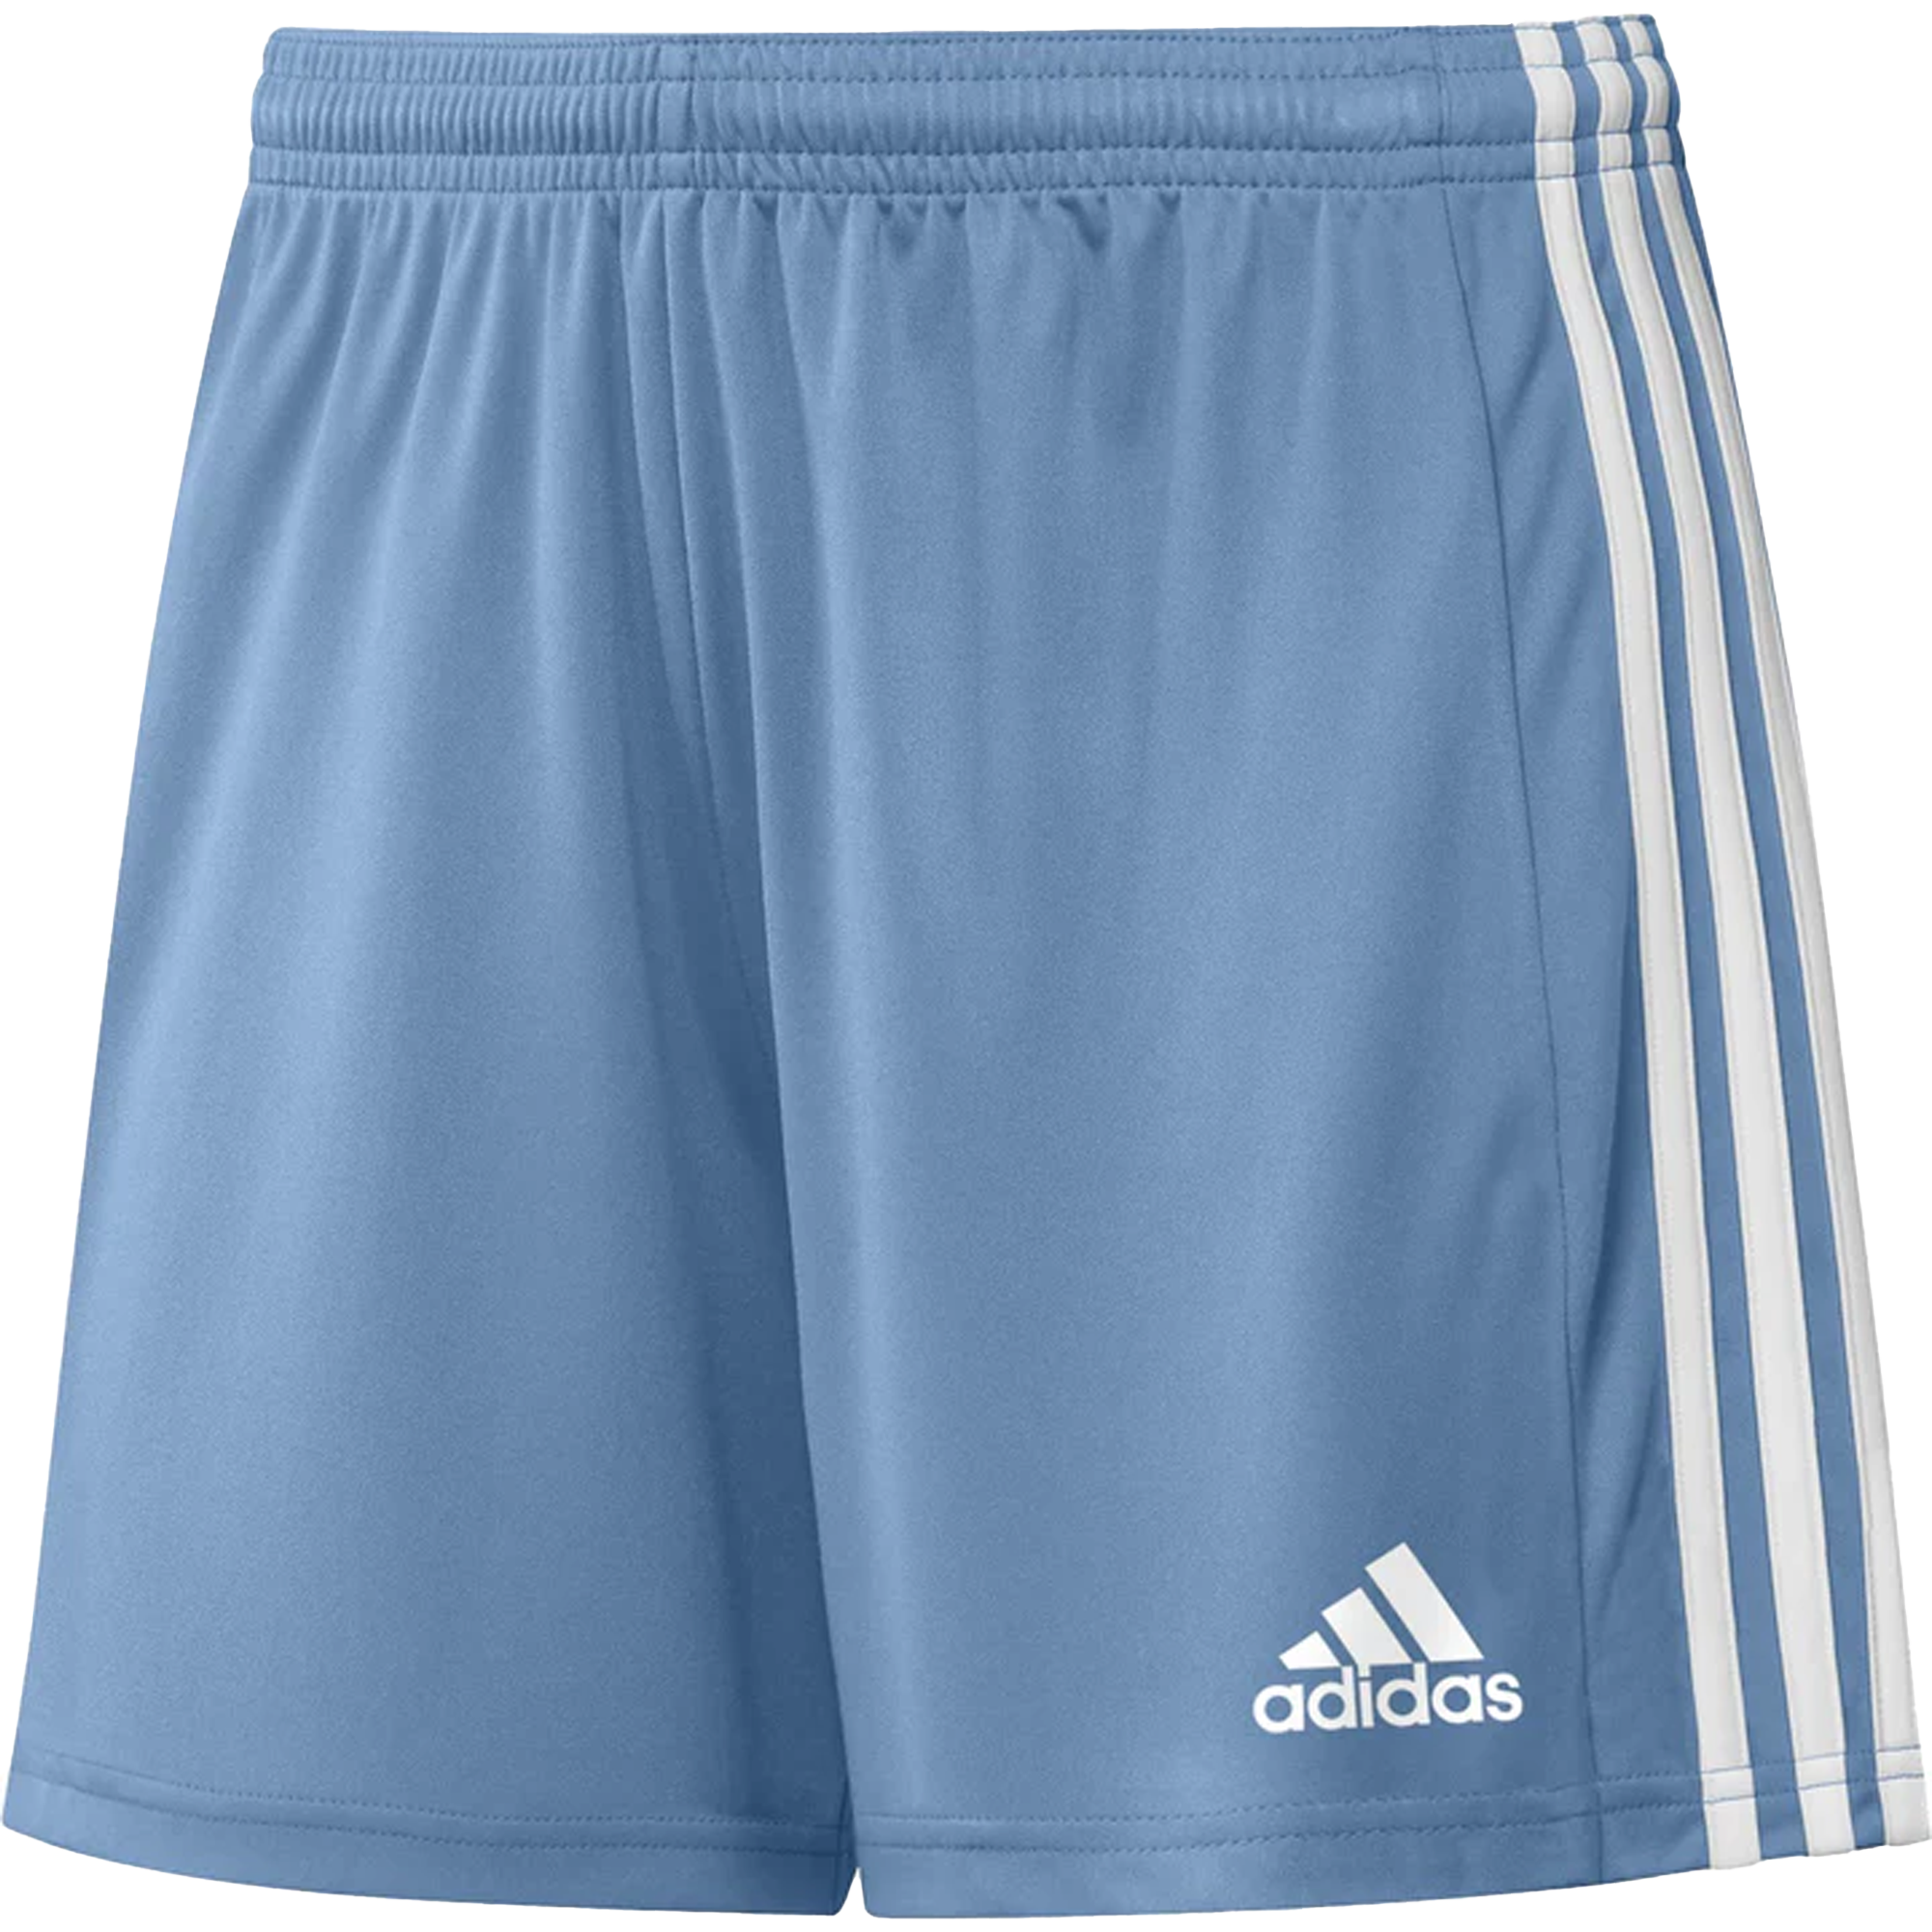 brysomme Nikke aften stefanssoccer.com:adidas Womens Squadra 21 Shorts - Team Light Blue / White